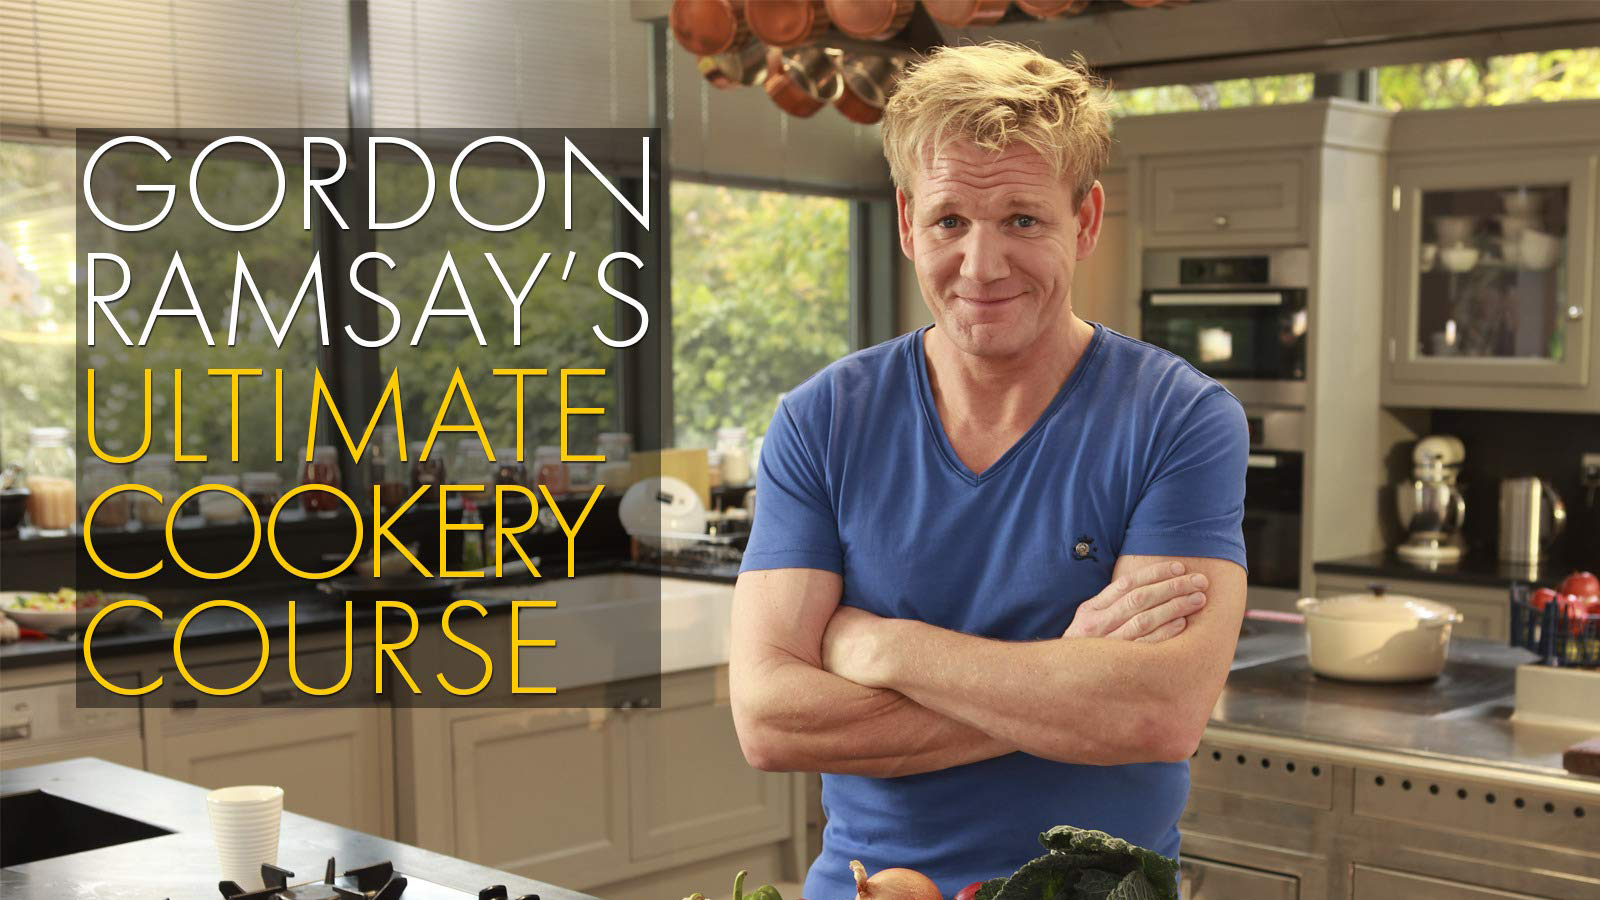 Gordon Ramsey’s Ultimate Cookery Course